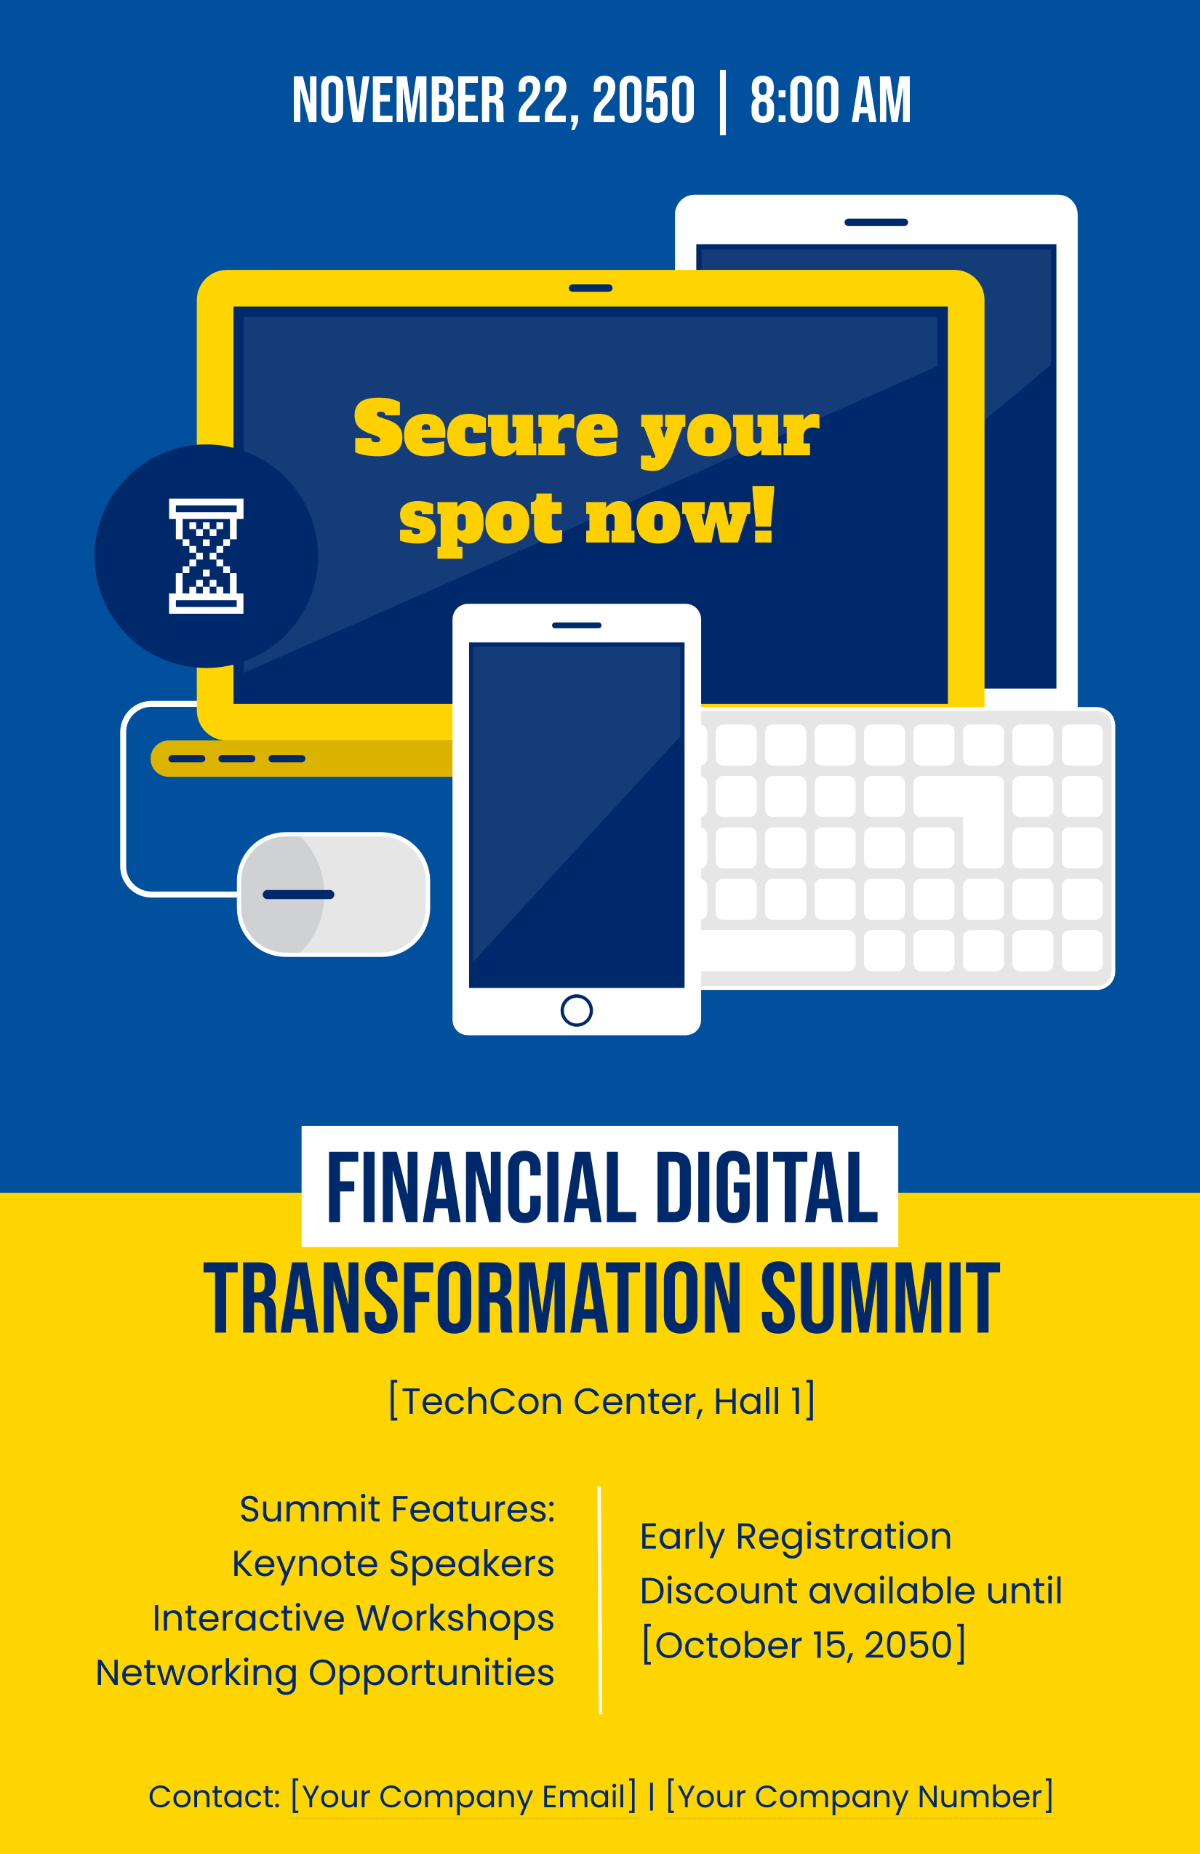 Financial Digital Transformation Summit Poster